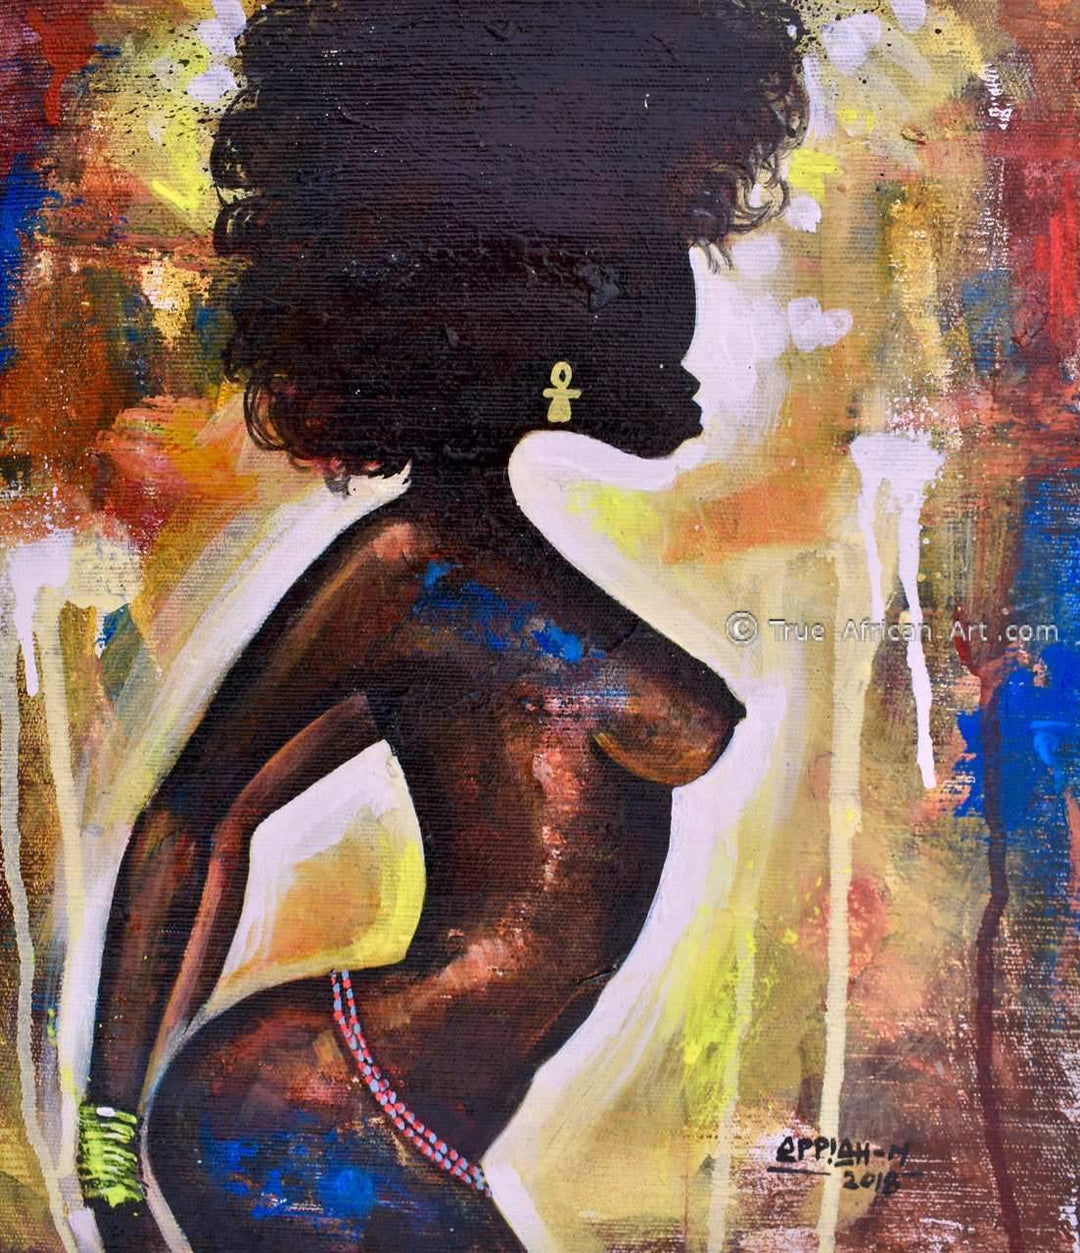 "In the Night" - Appiah Ntiaw - True African Art .com